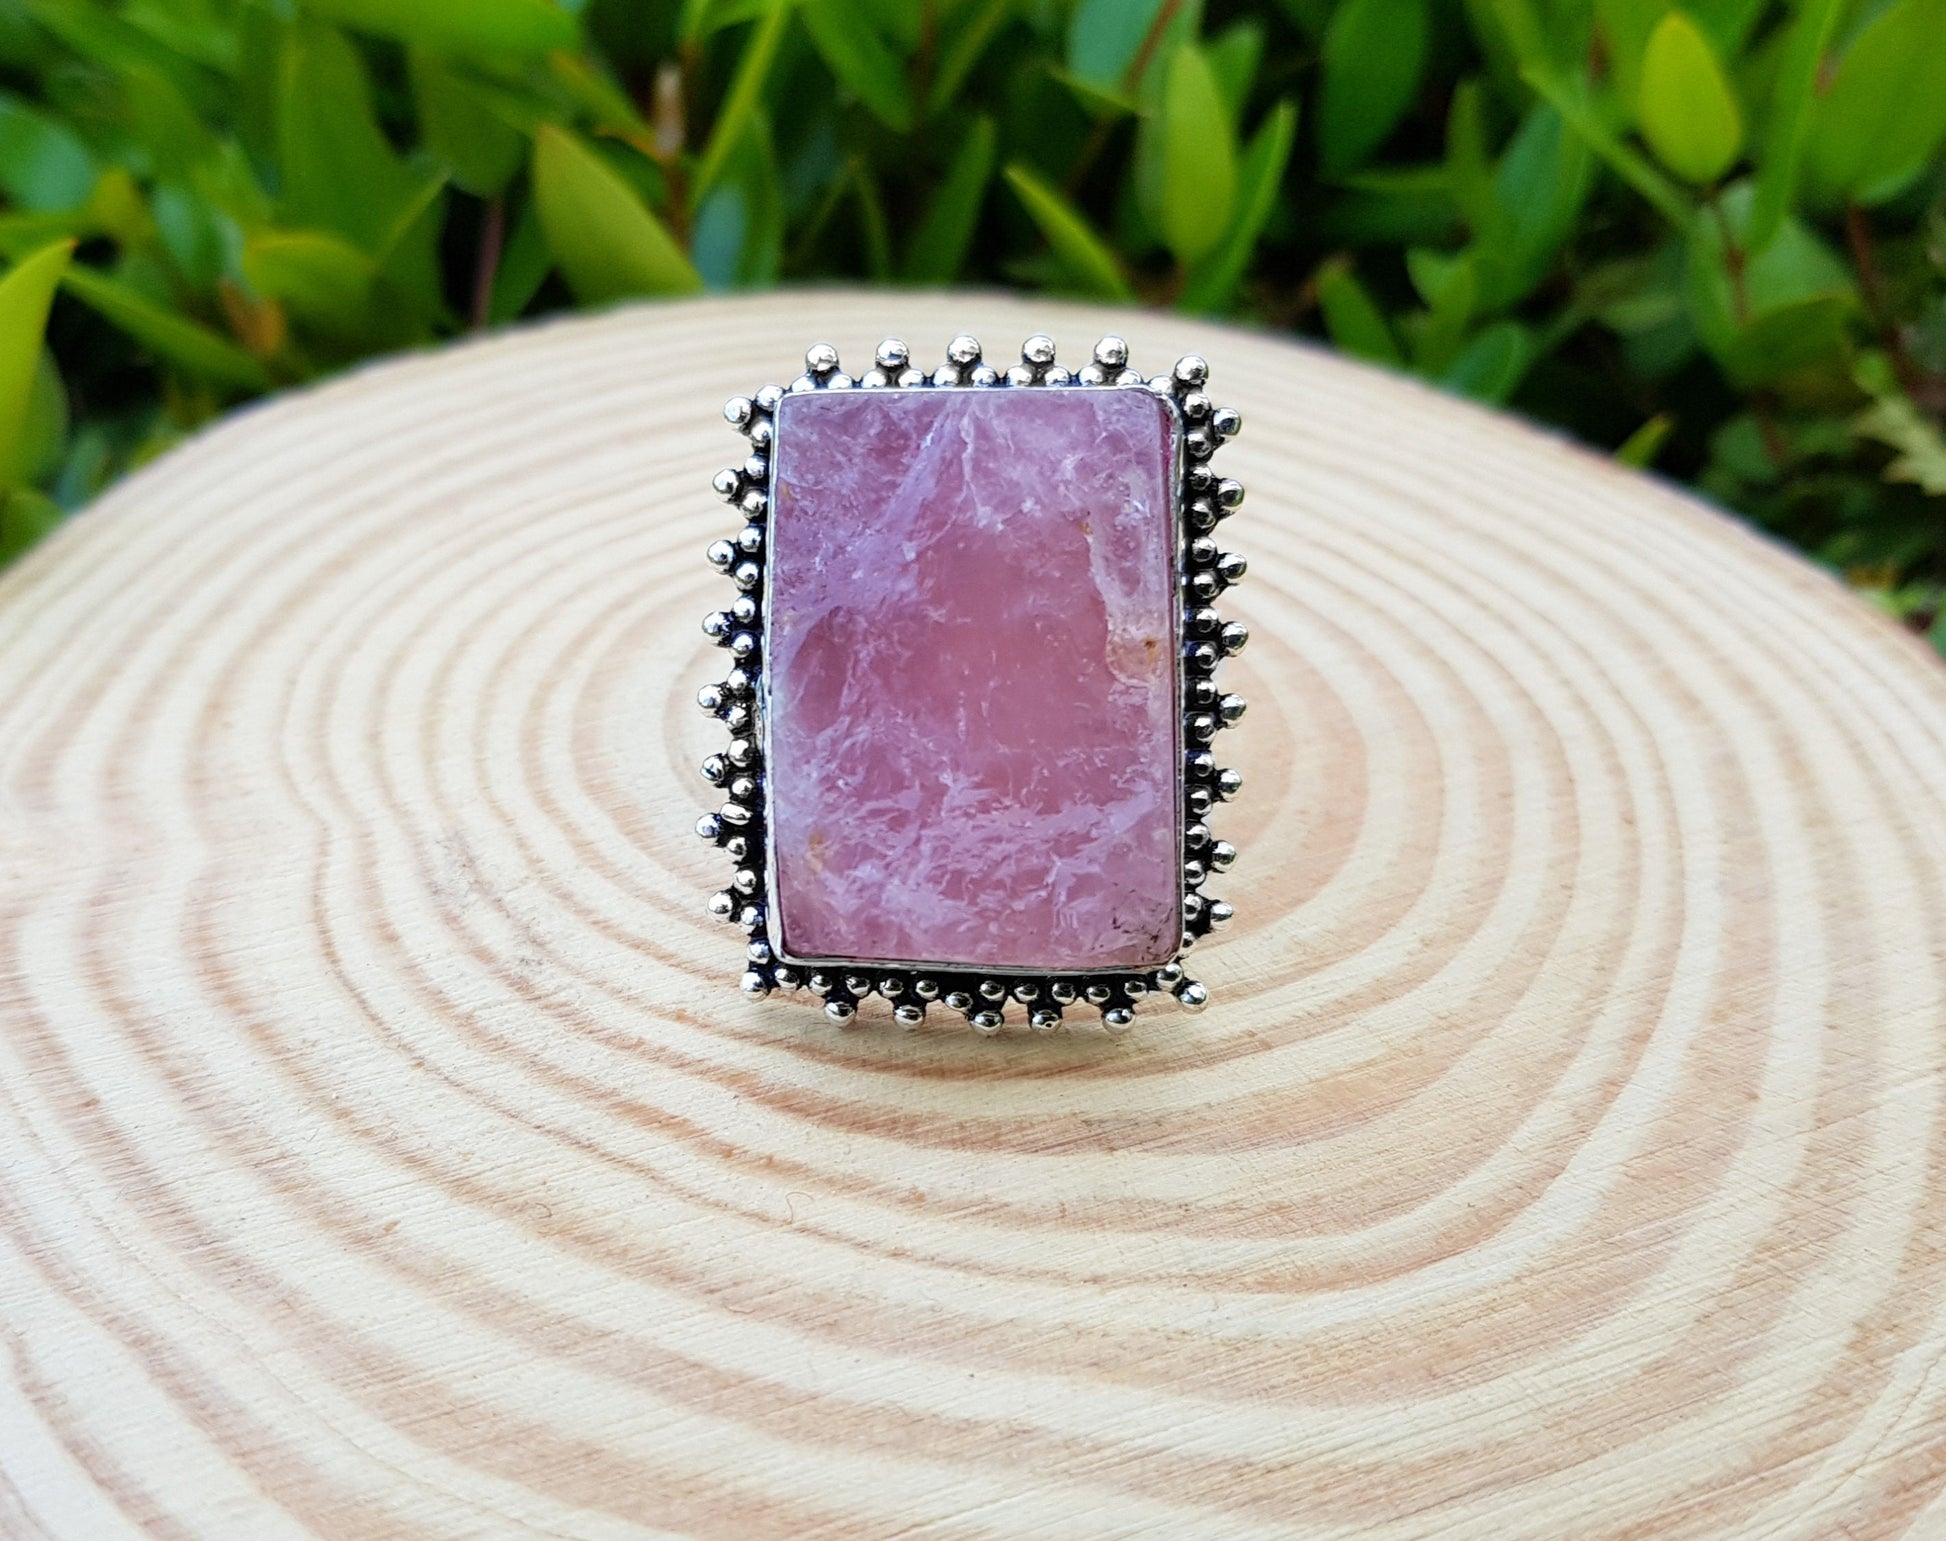 Rough Pink Rose Quartz Gemstone Ring In Sterling Silver Size US 7 3/4 Big Statement Ring